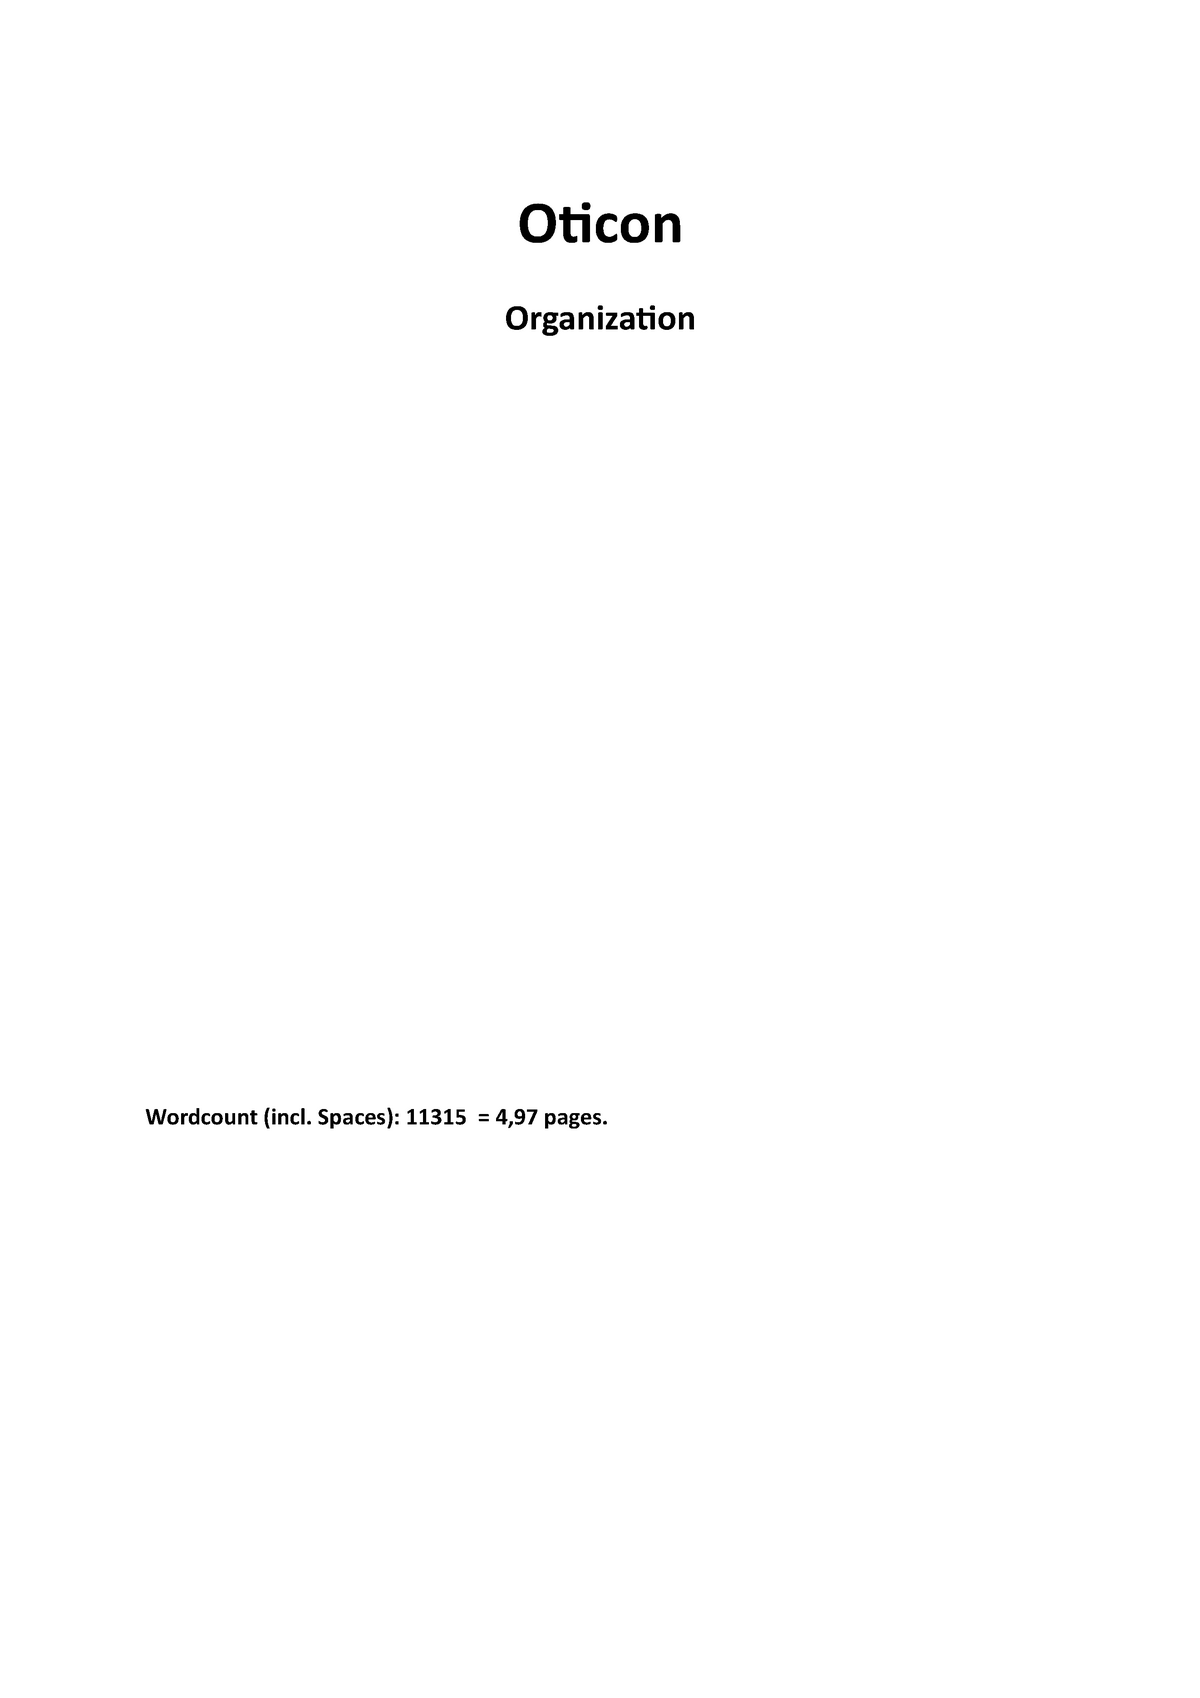 spand Blinke Sanctuary Organisation exam synopsis - Oticon Organization Wordcount (incl. Spaces):  11315 4,97 pages. OTICON - Studocu